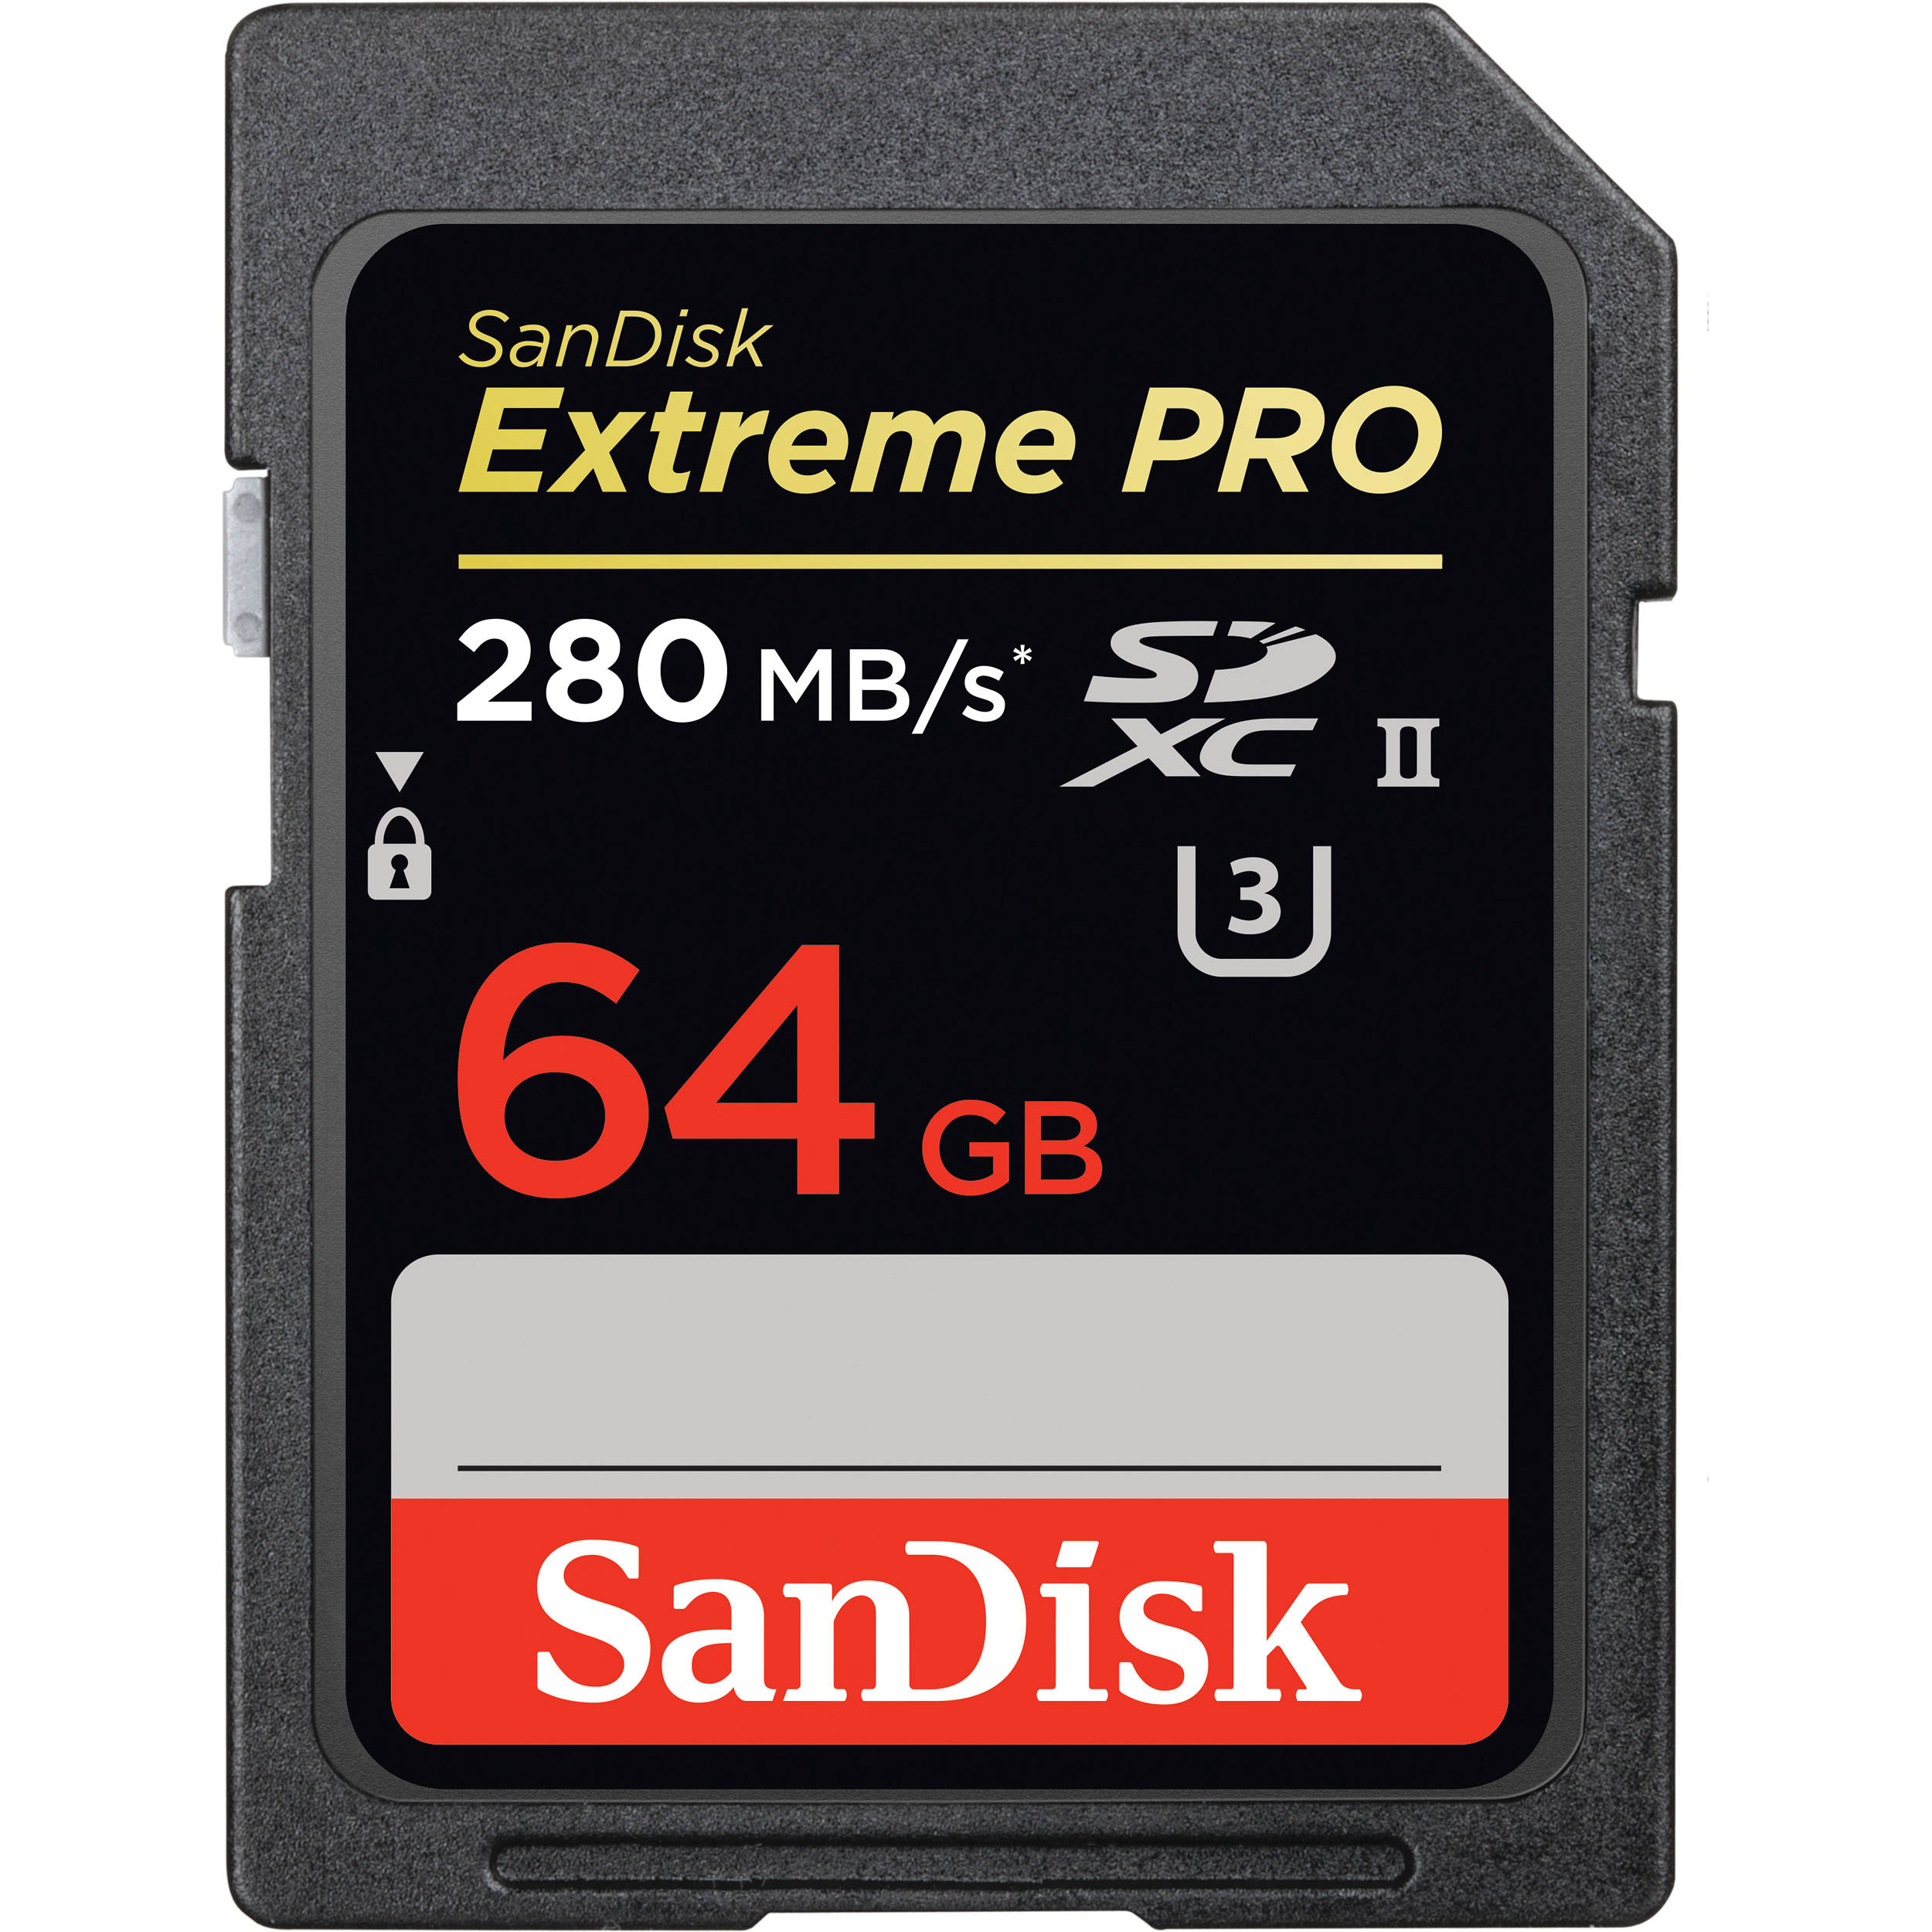 1 Twin Pack Casio Exilim EX-Z115 Digital Camera Memory Card 2 x 2GB Standard Secure Digital SD Memory Card